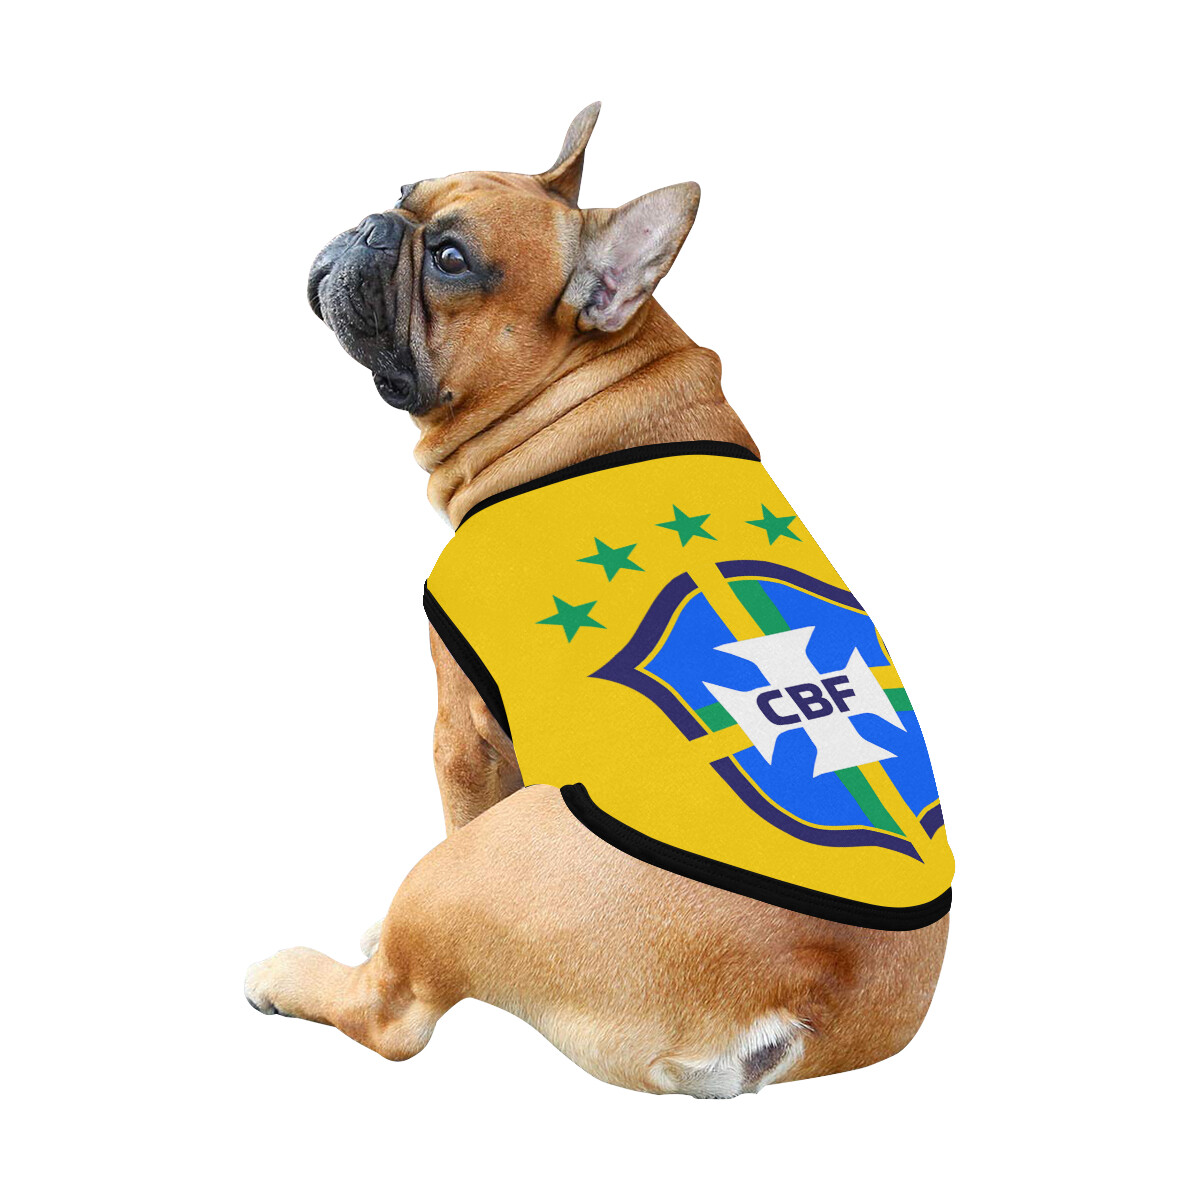 🐕🇧🇷⚽️ Brazil, Soccer Team, Dog t-shirt, Dog Tank Top, Dog shirt, Dog clothes, Dog jersey, Gift, 7 sizes XS to 3XL, Brazilian, I love sports, yellow